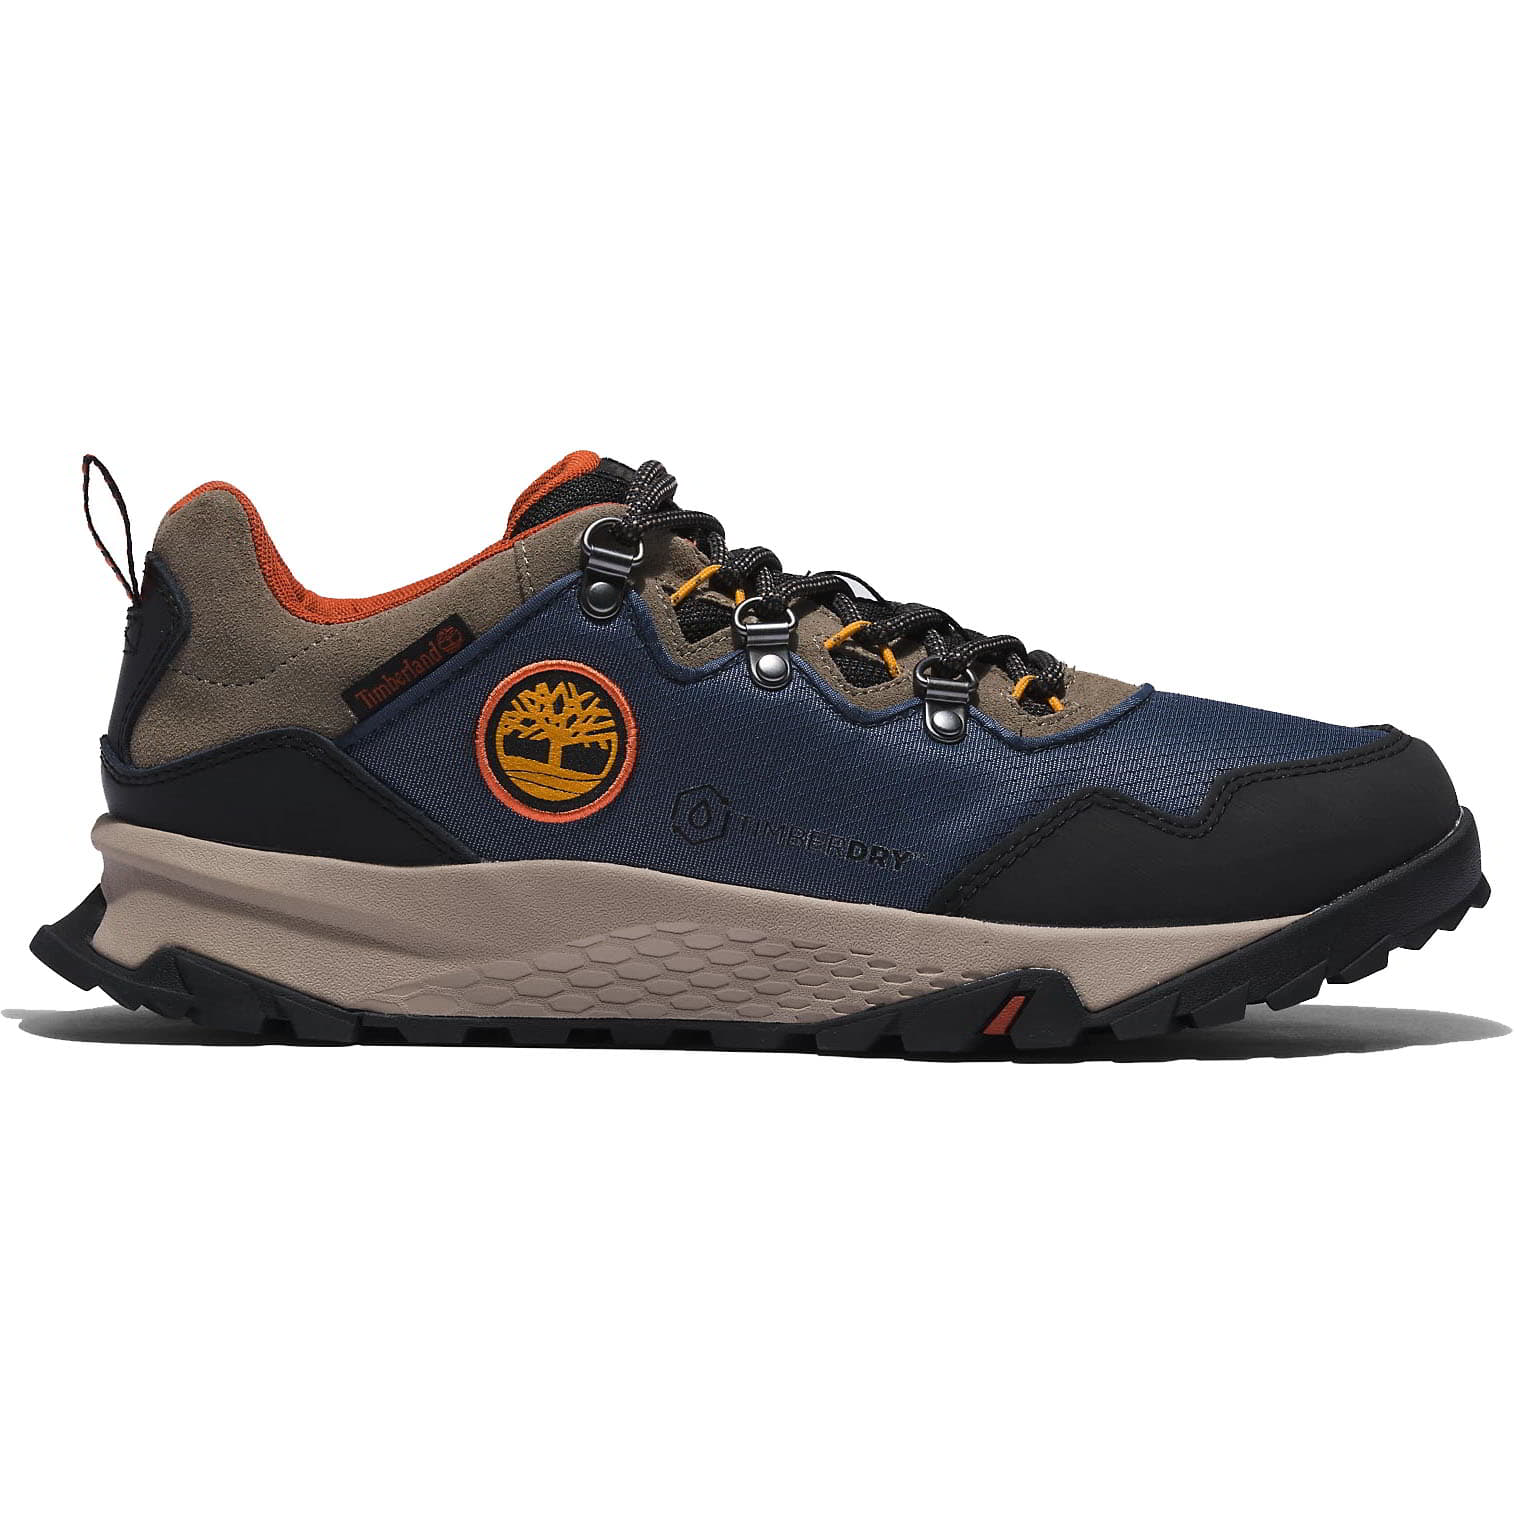 Timberland Mens A2DZZ Lincoln Peak Low Waterproof Walking Hiking Shoes - UK 8.5 Blue 2951